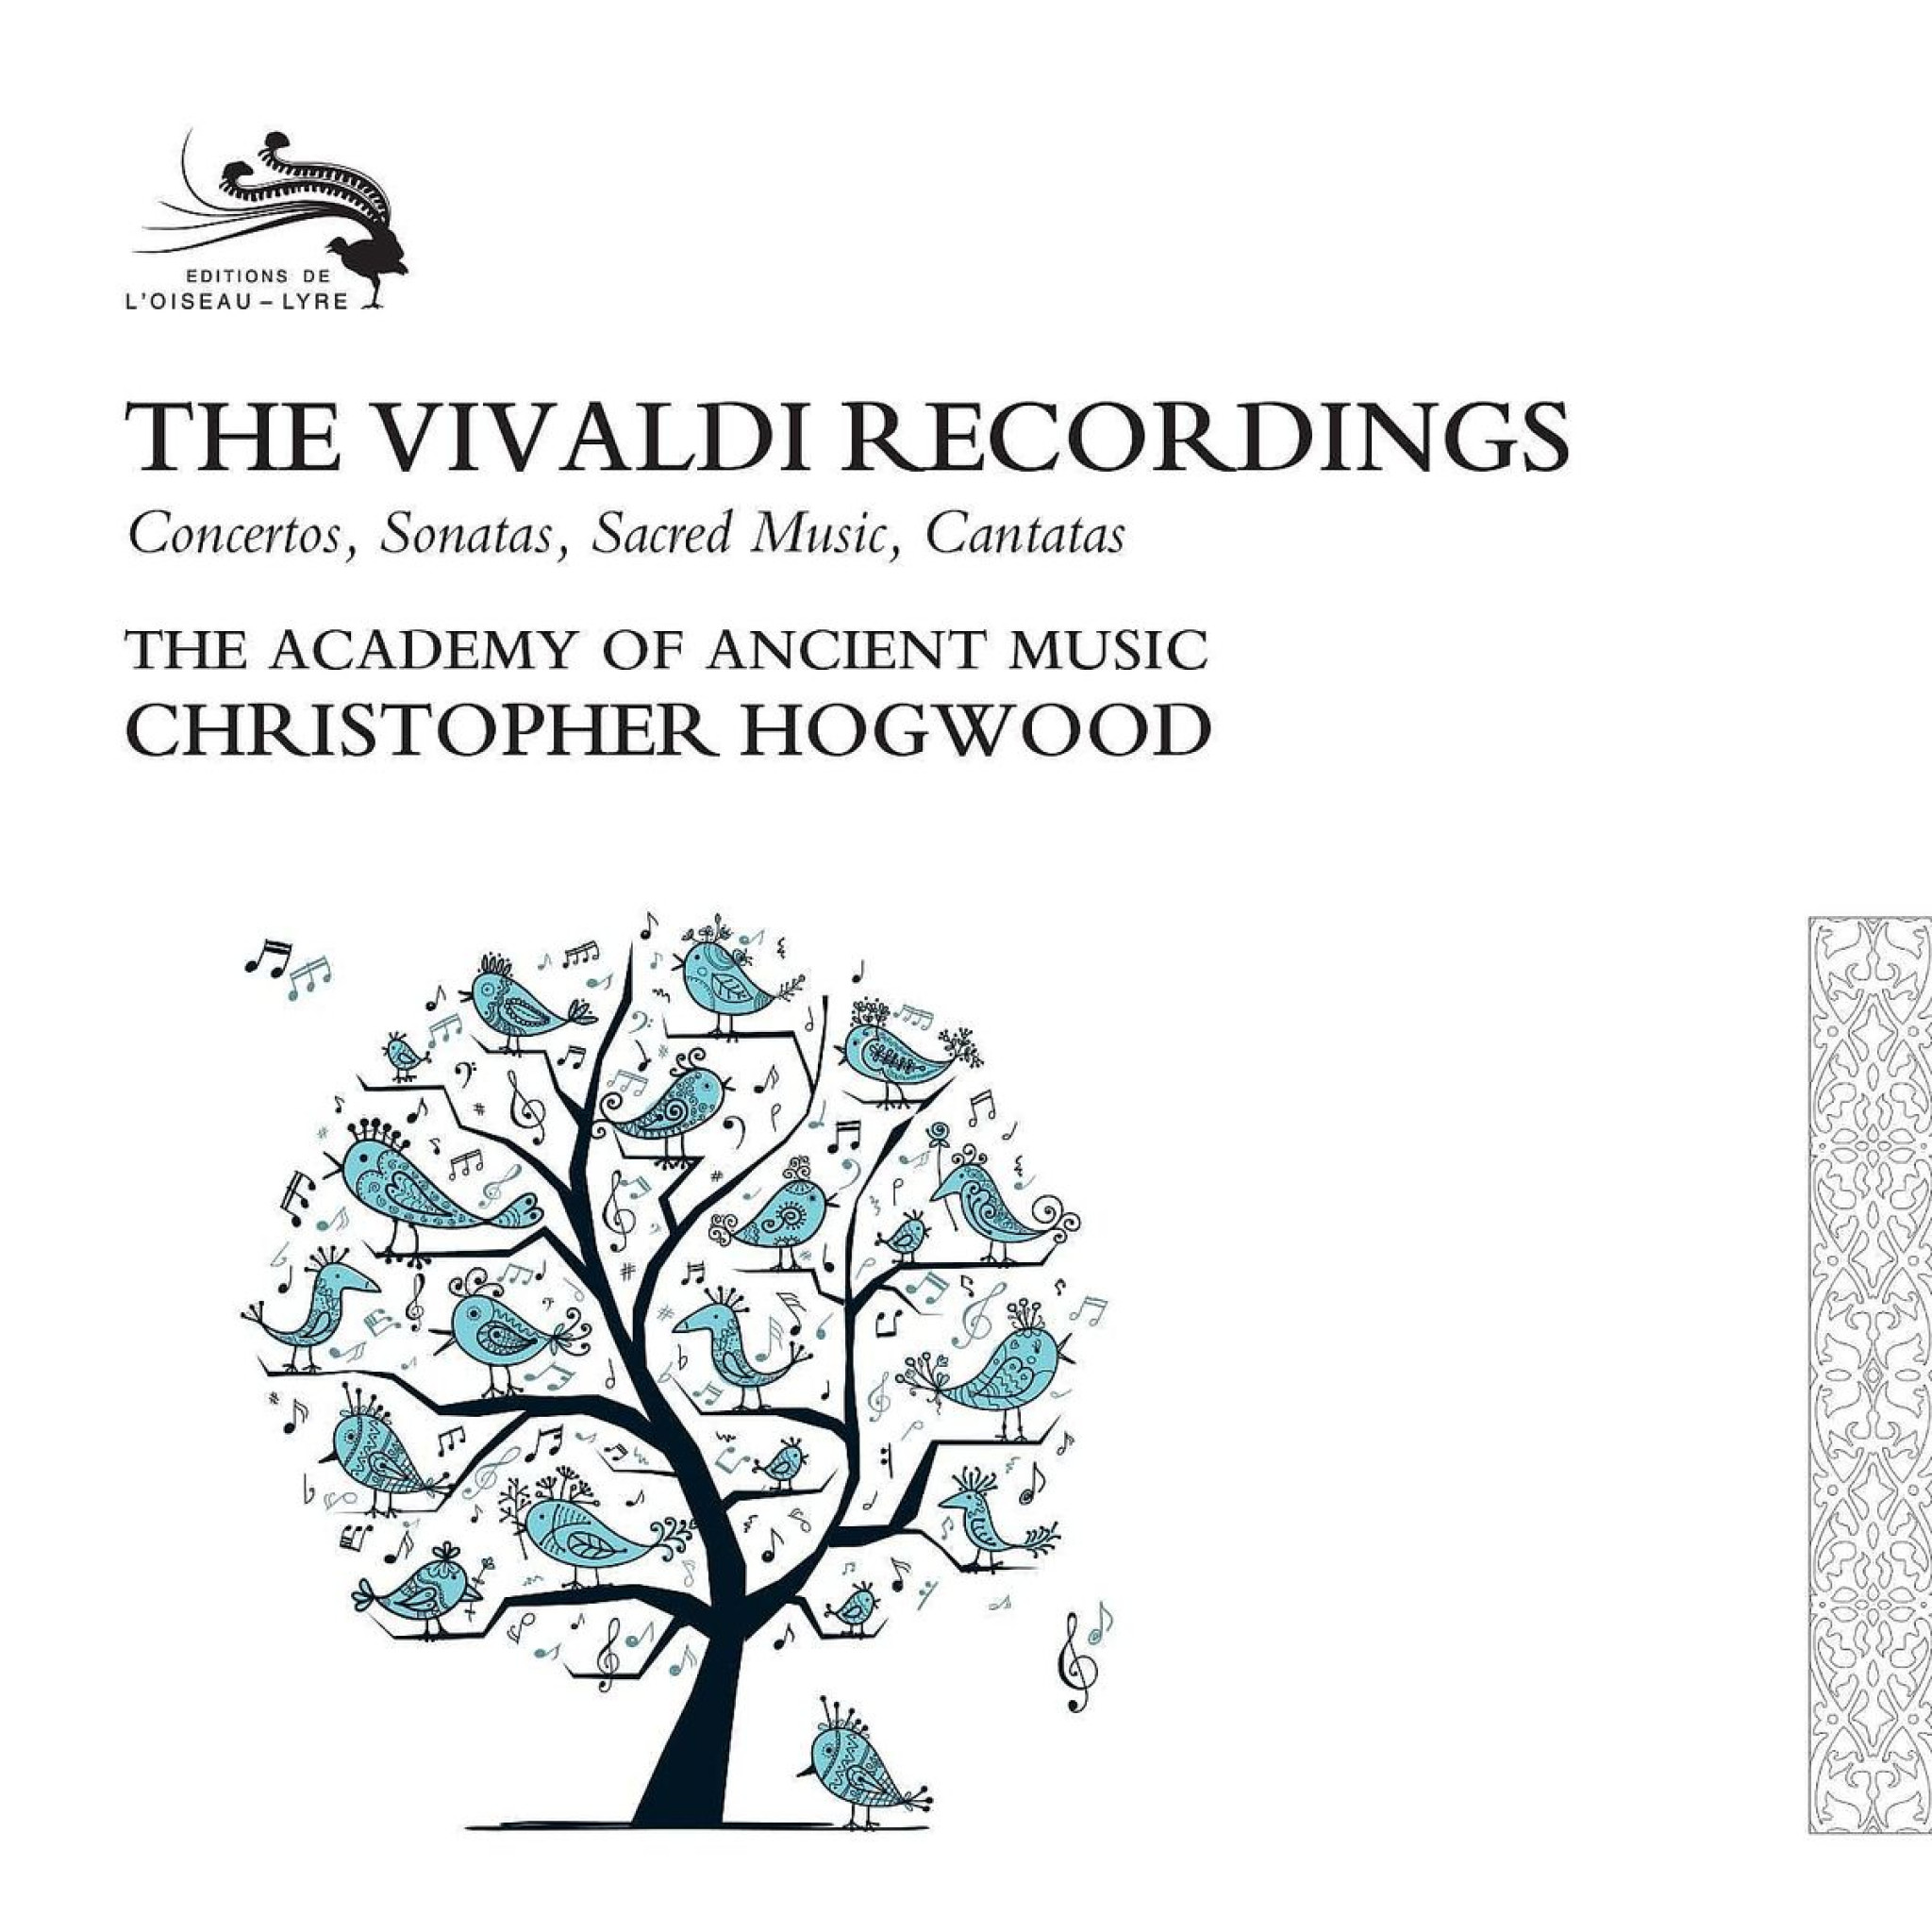 THE VIVALDI RECORDINGS